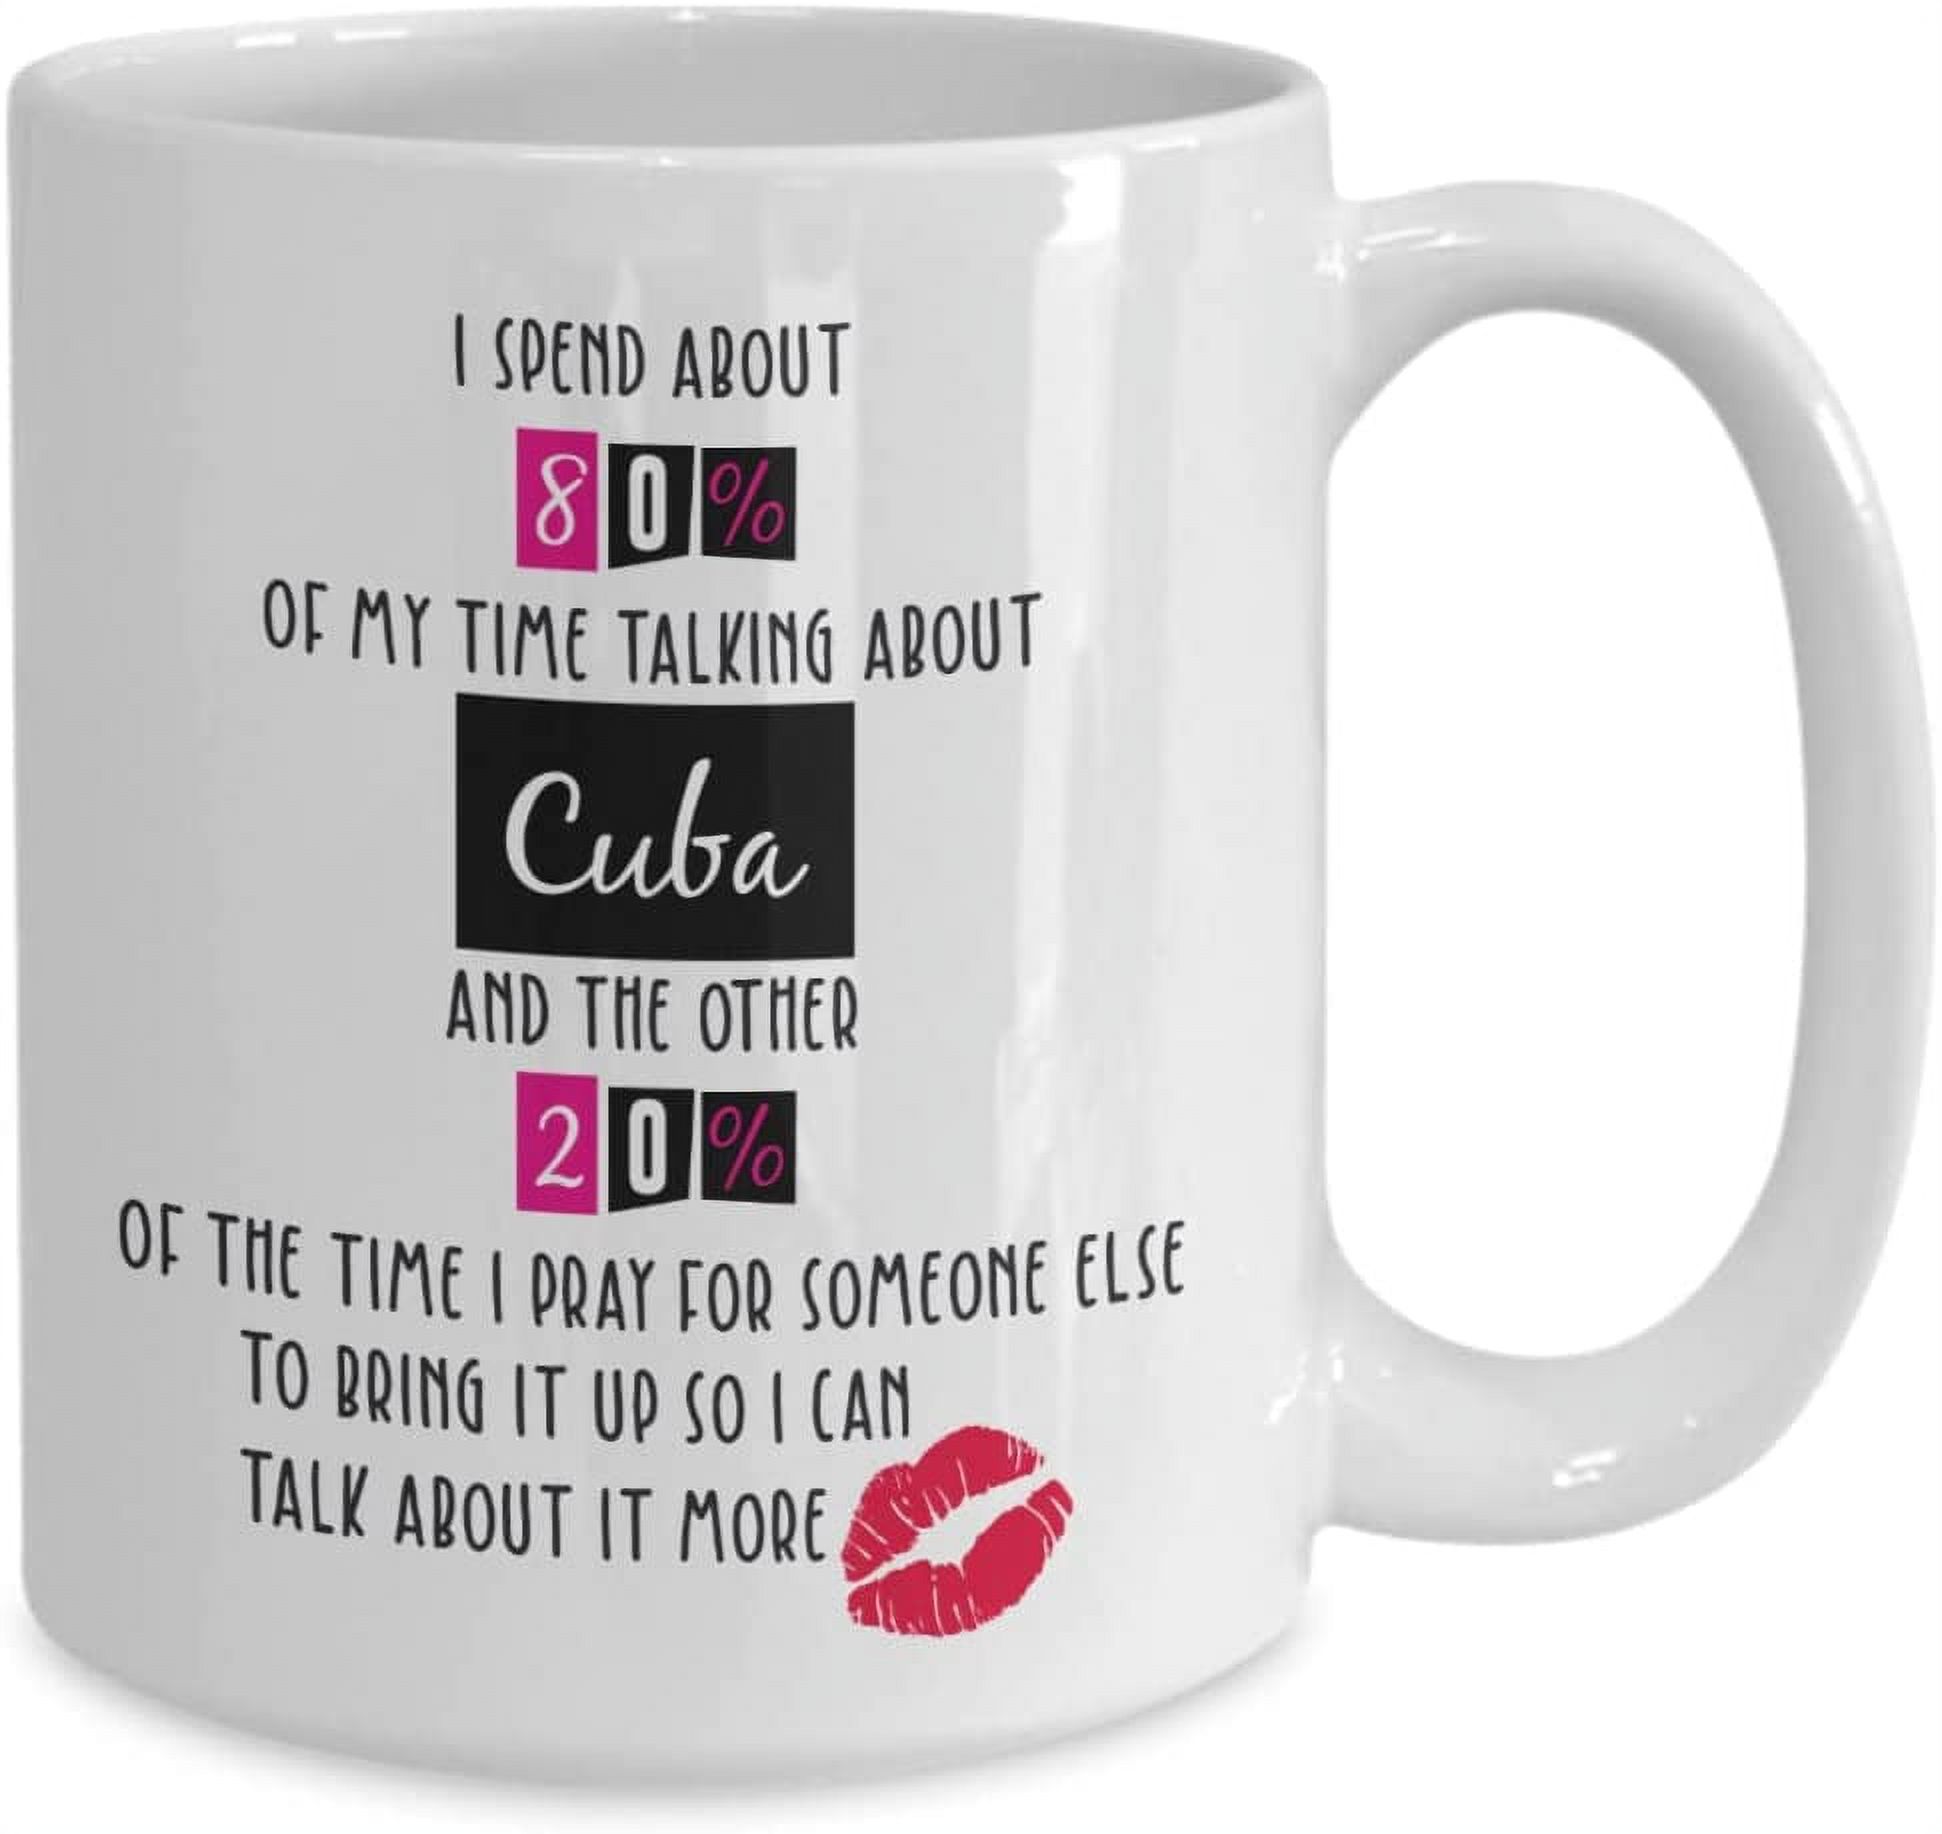 Cuba Coffee Mug, Cuba Gifts, Gifts For Cuba, Cuba Gifts For Man And Woman, Cuba Mug, Cuba Friend Gift, Birthday Christmas Basket gag Gift Idea - image 2 of 3